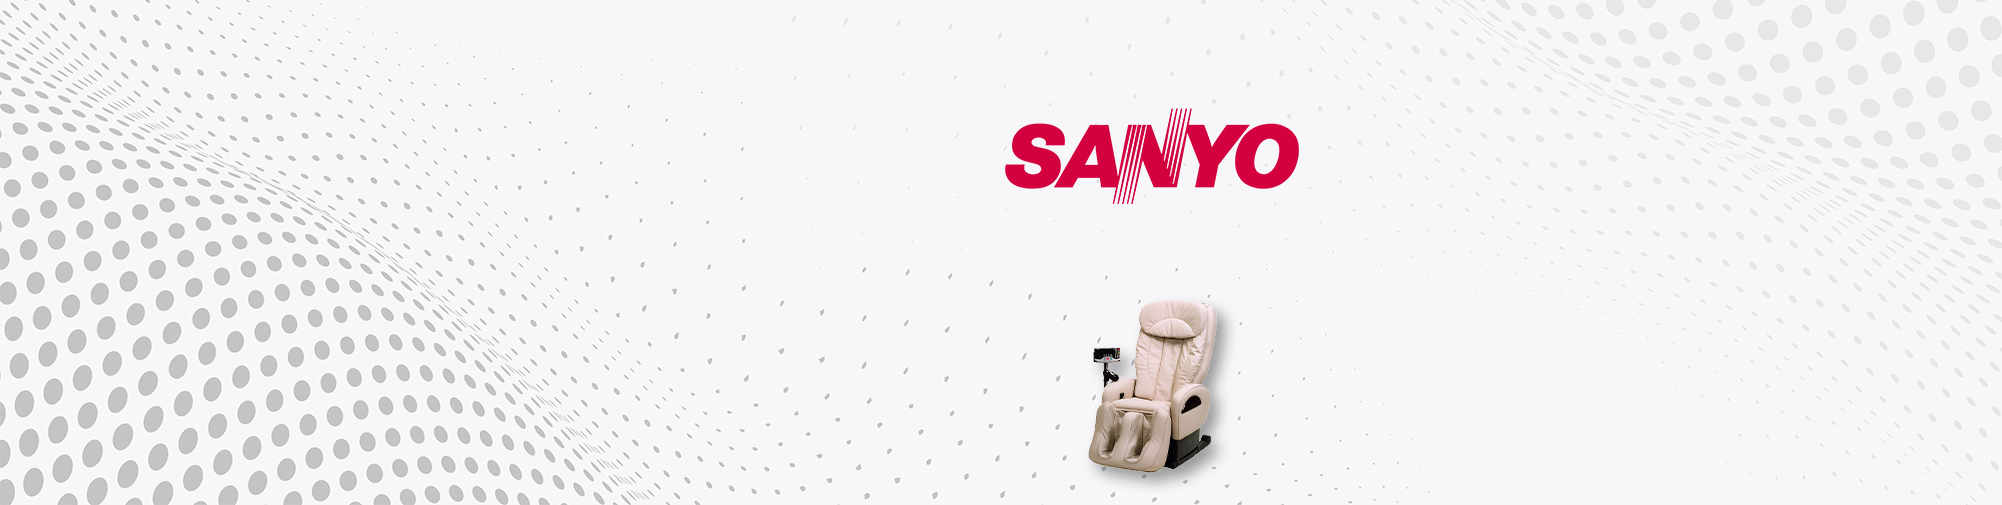 SANYO - Japanse merkfabrikant | Massage Chair World